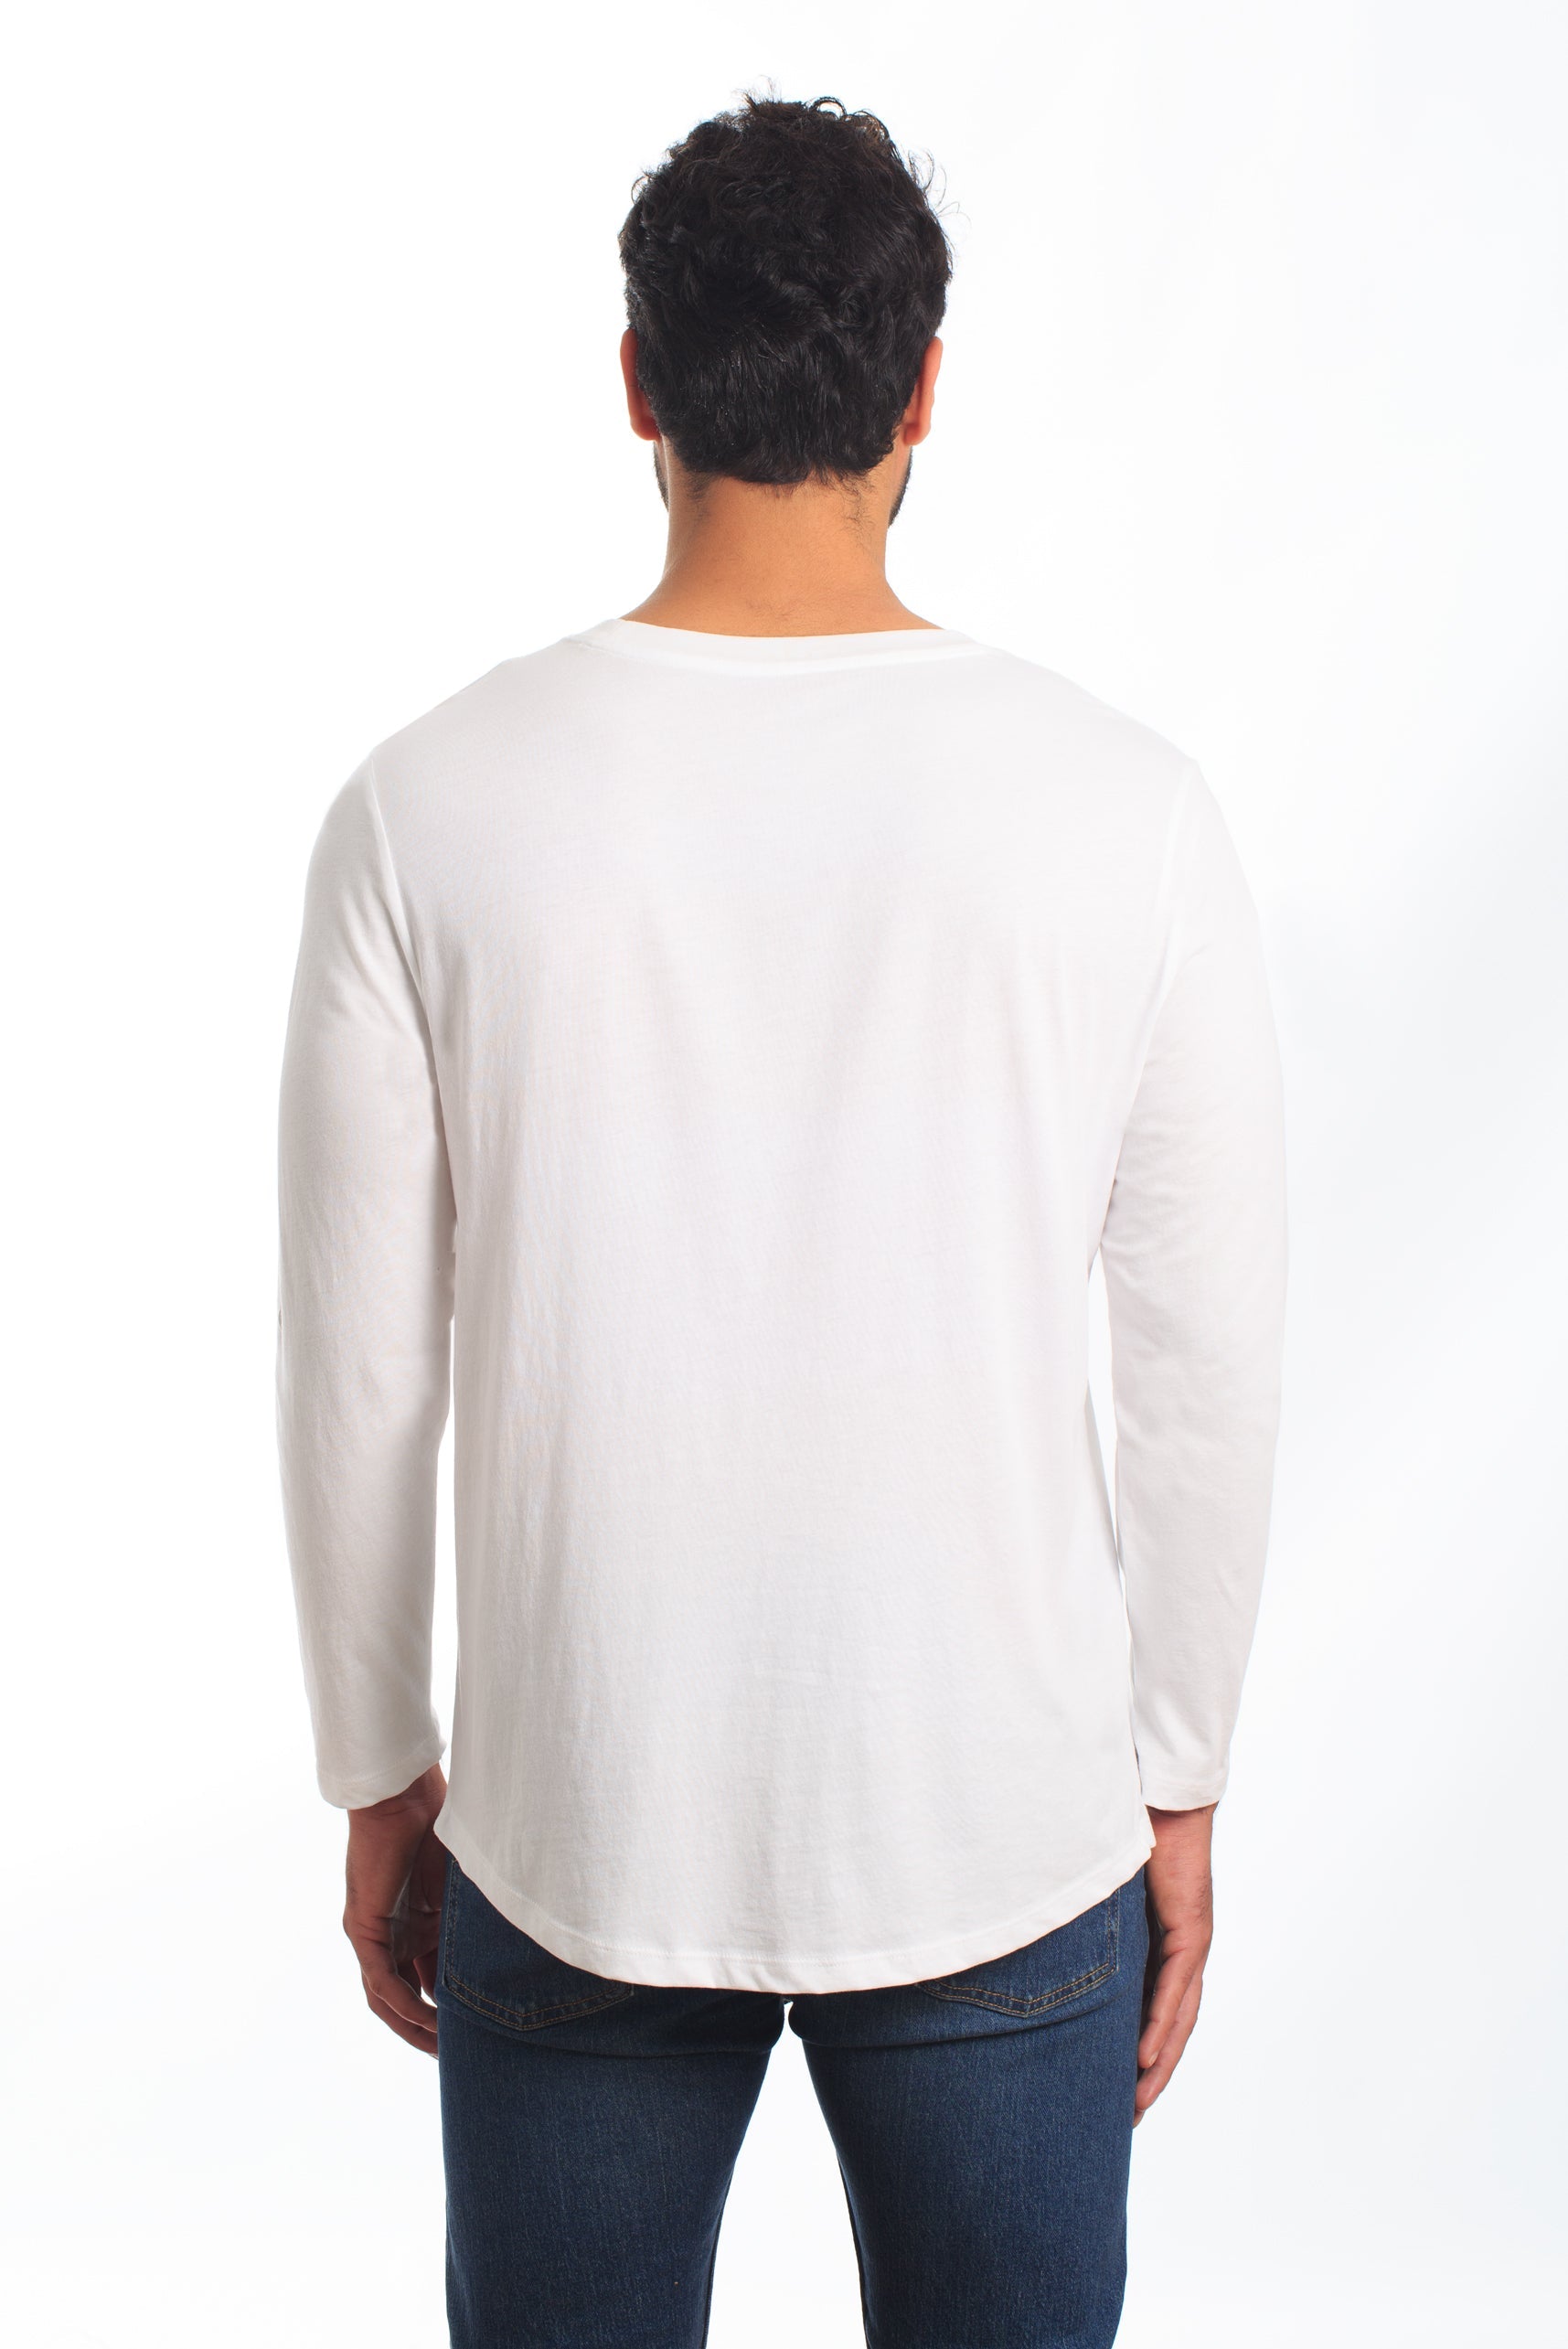 White Long Sleeve T-Shirt TEL-112 Back